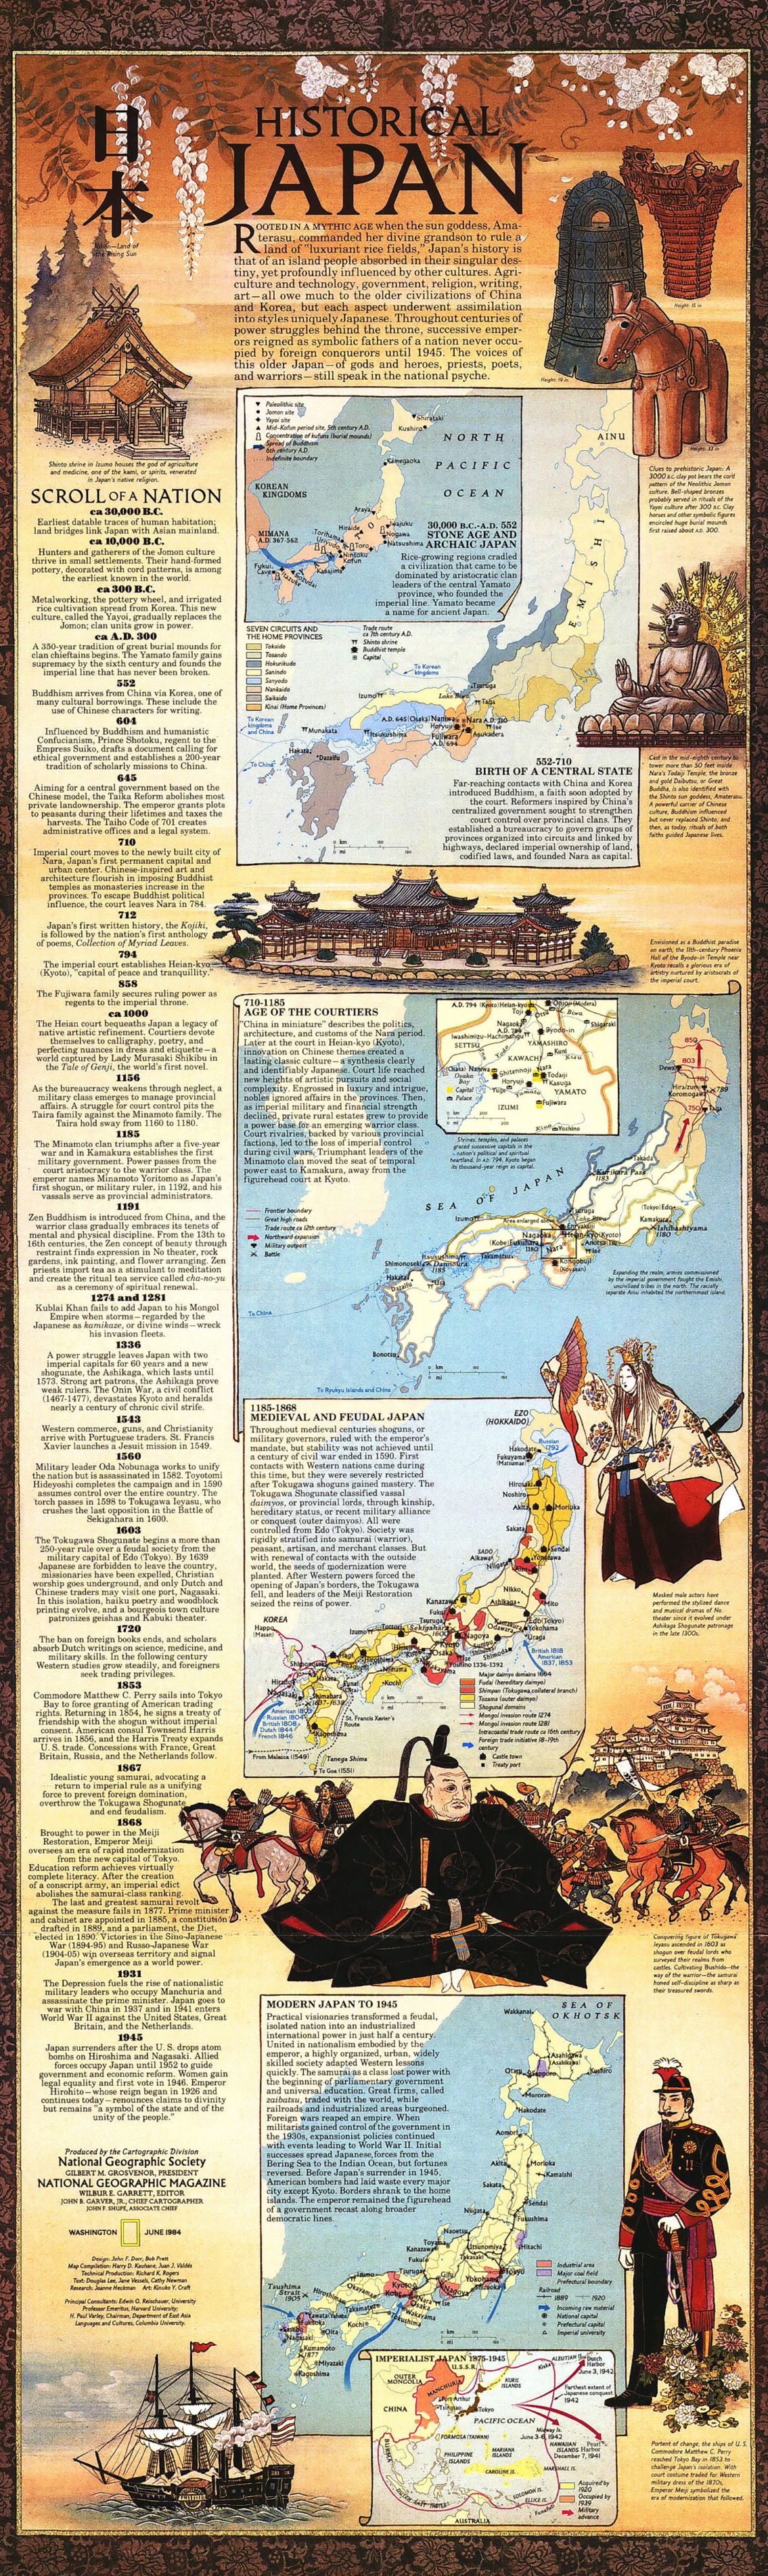 Historical Timeline of Japan 1984 Infographic